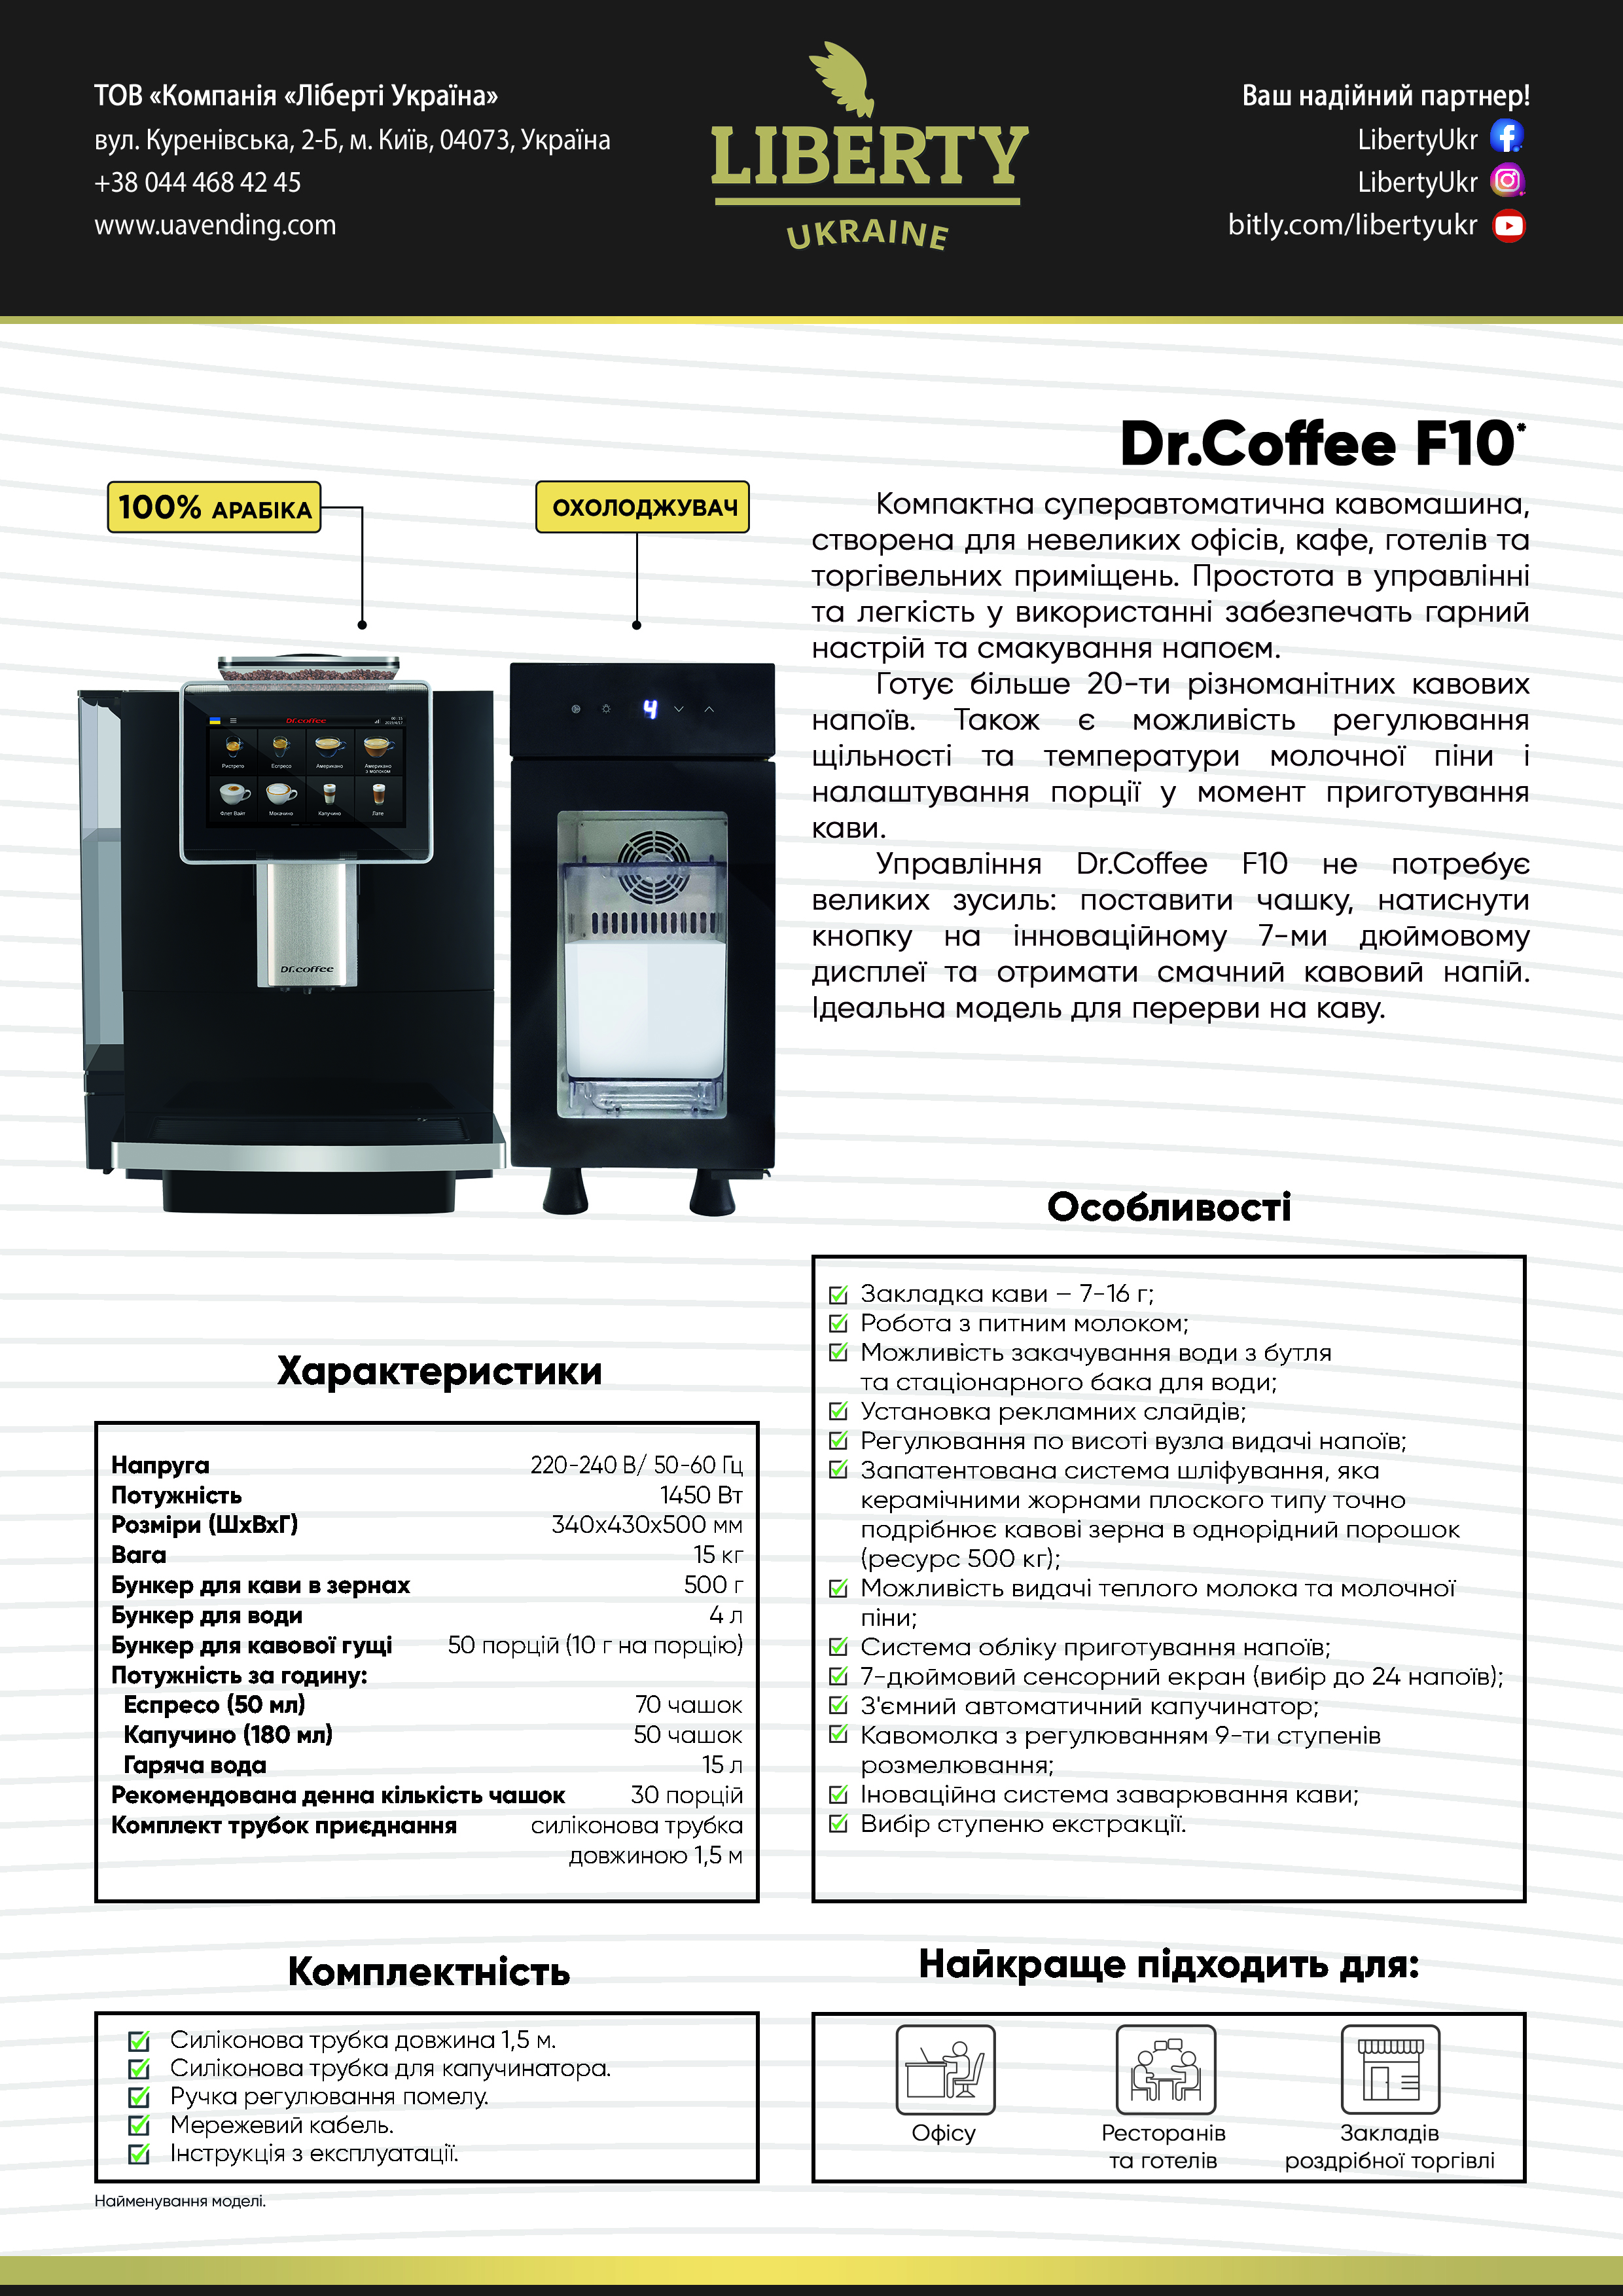 Dr. Café_F10